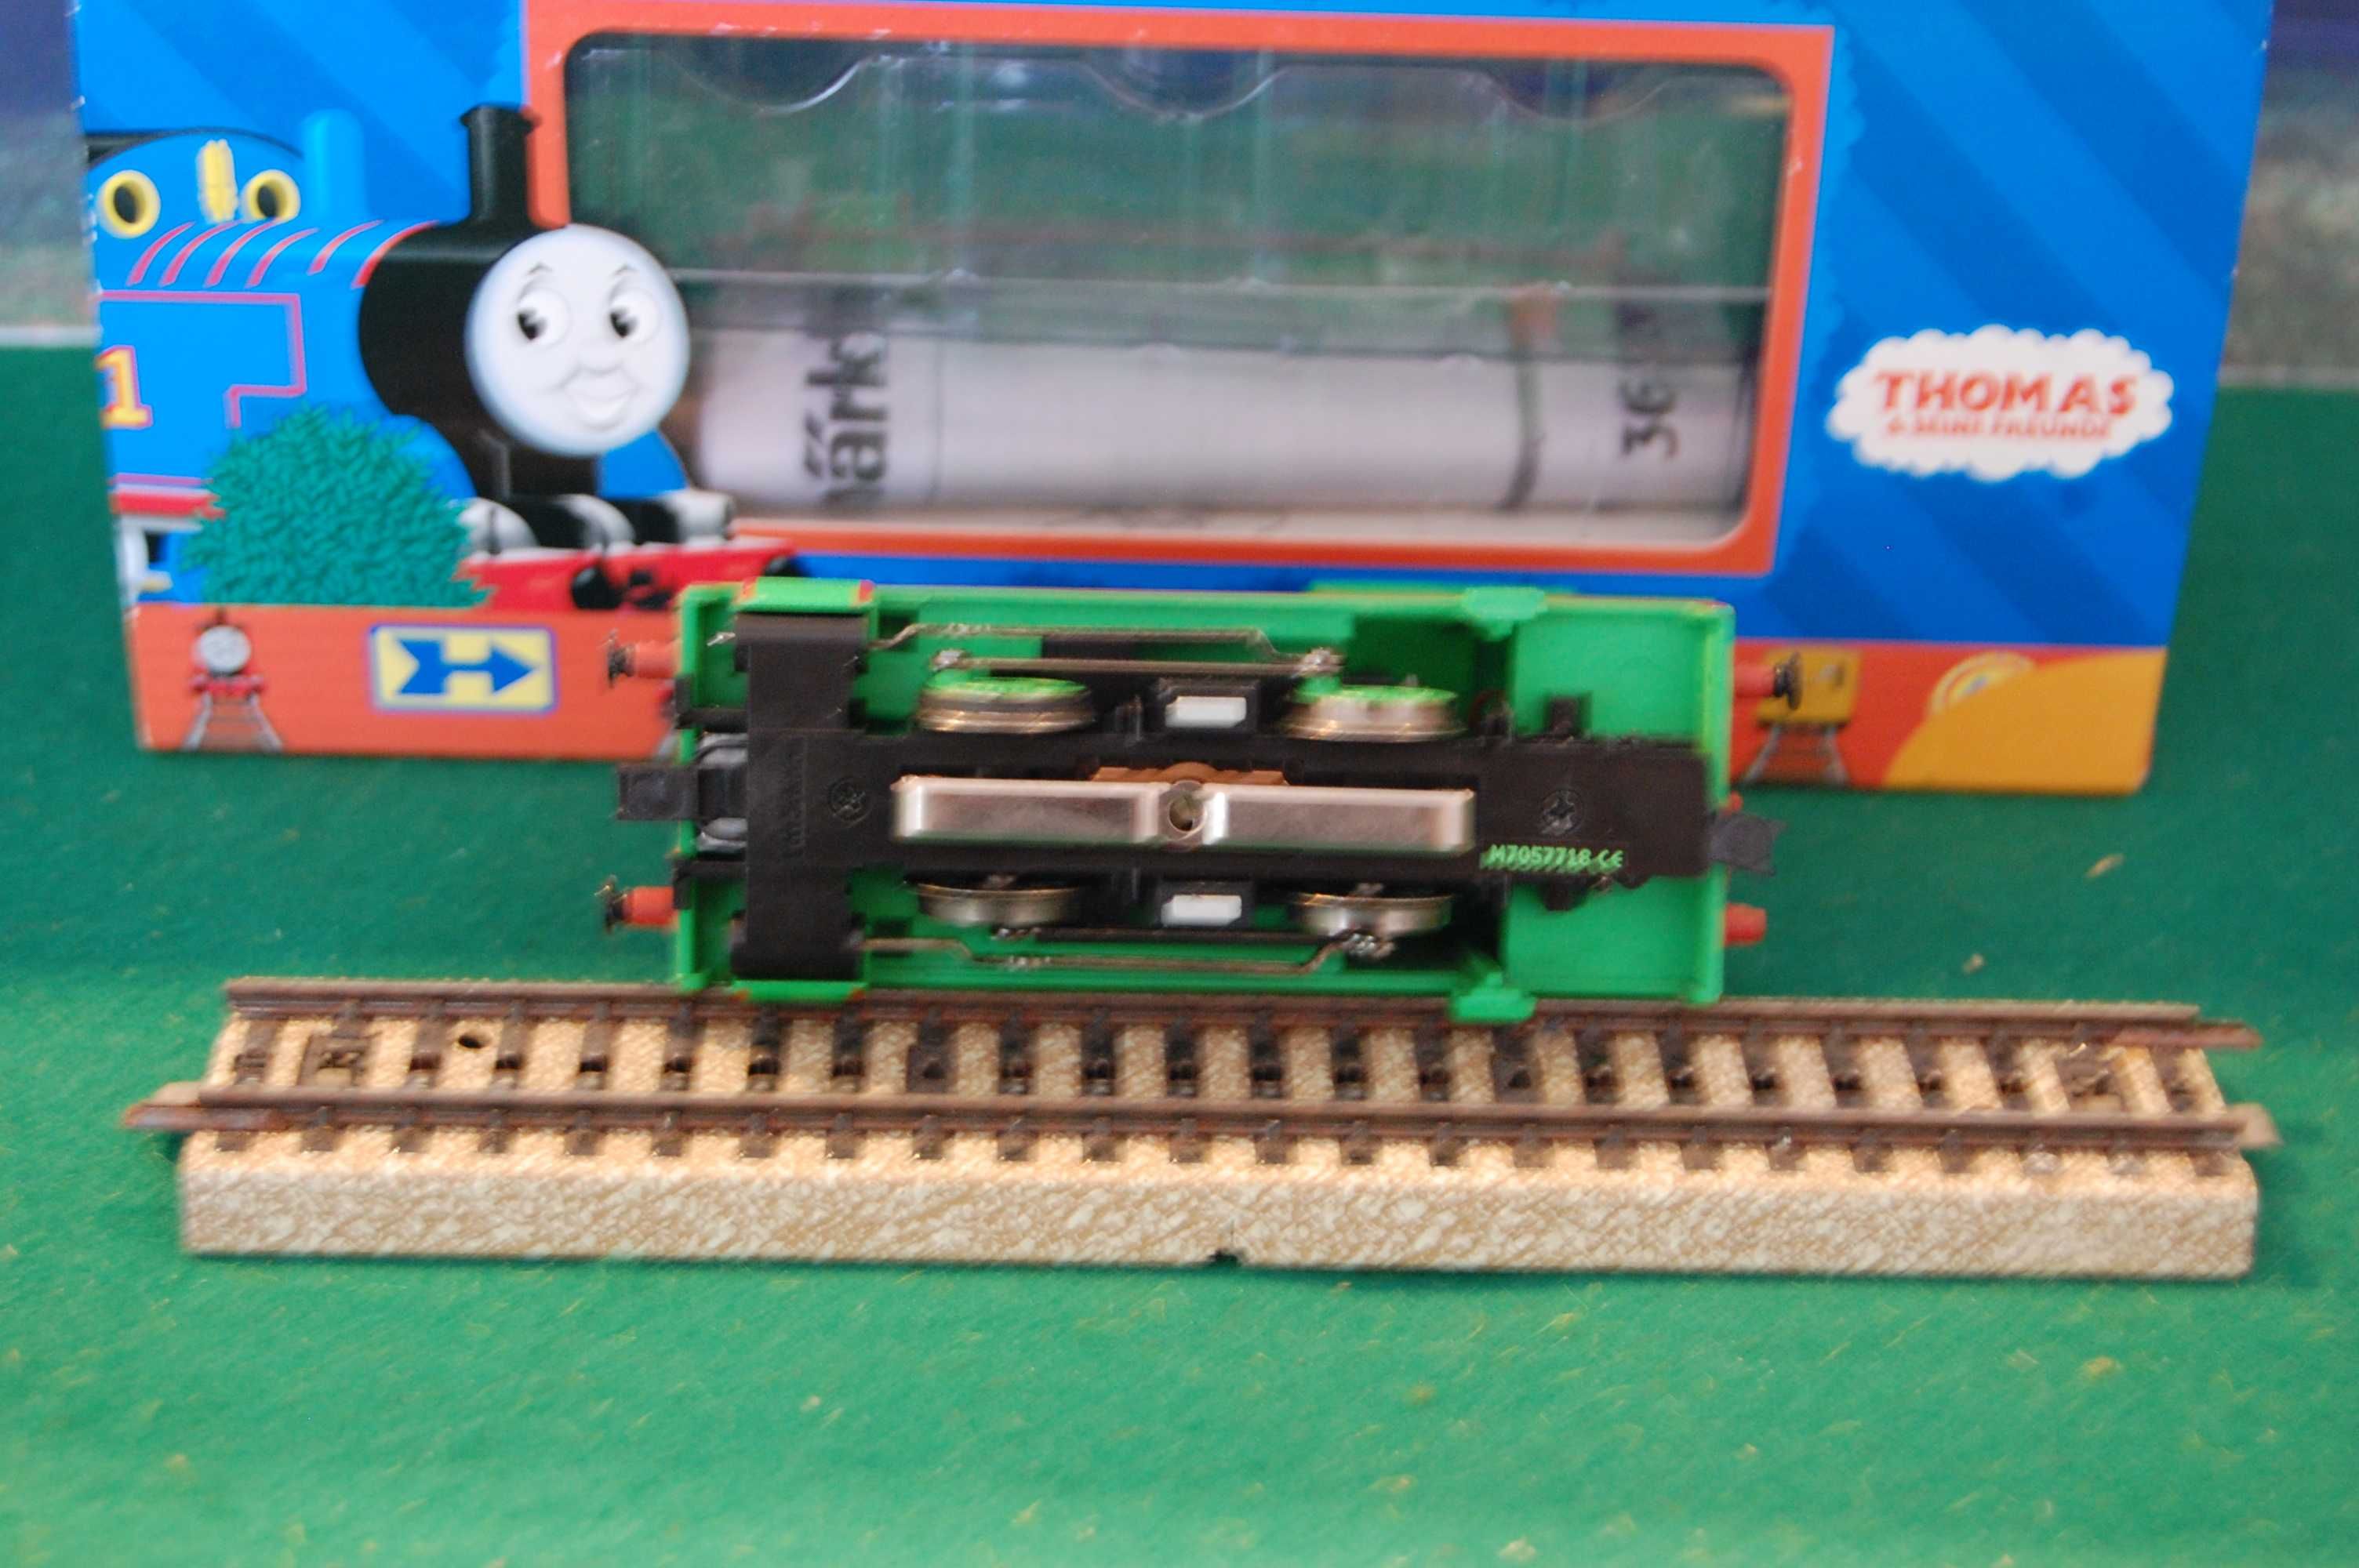 Märklin - locomotiva Percy, amiga do famoso Thomas (1)